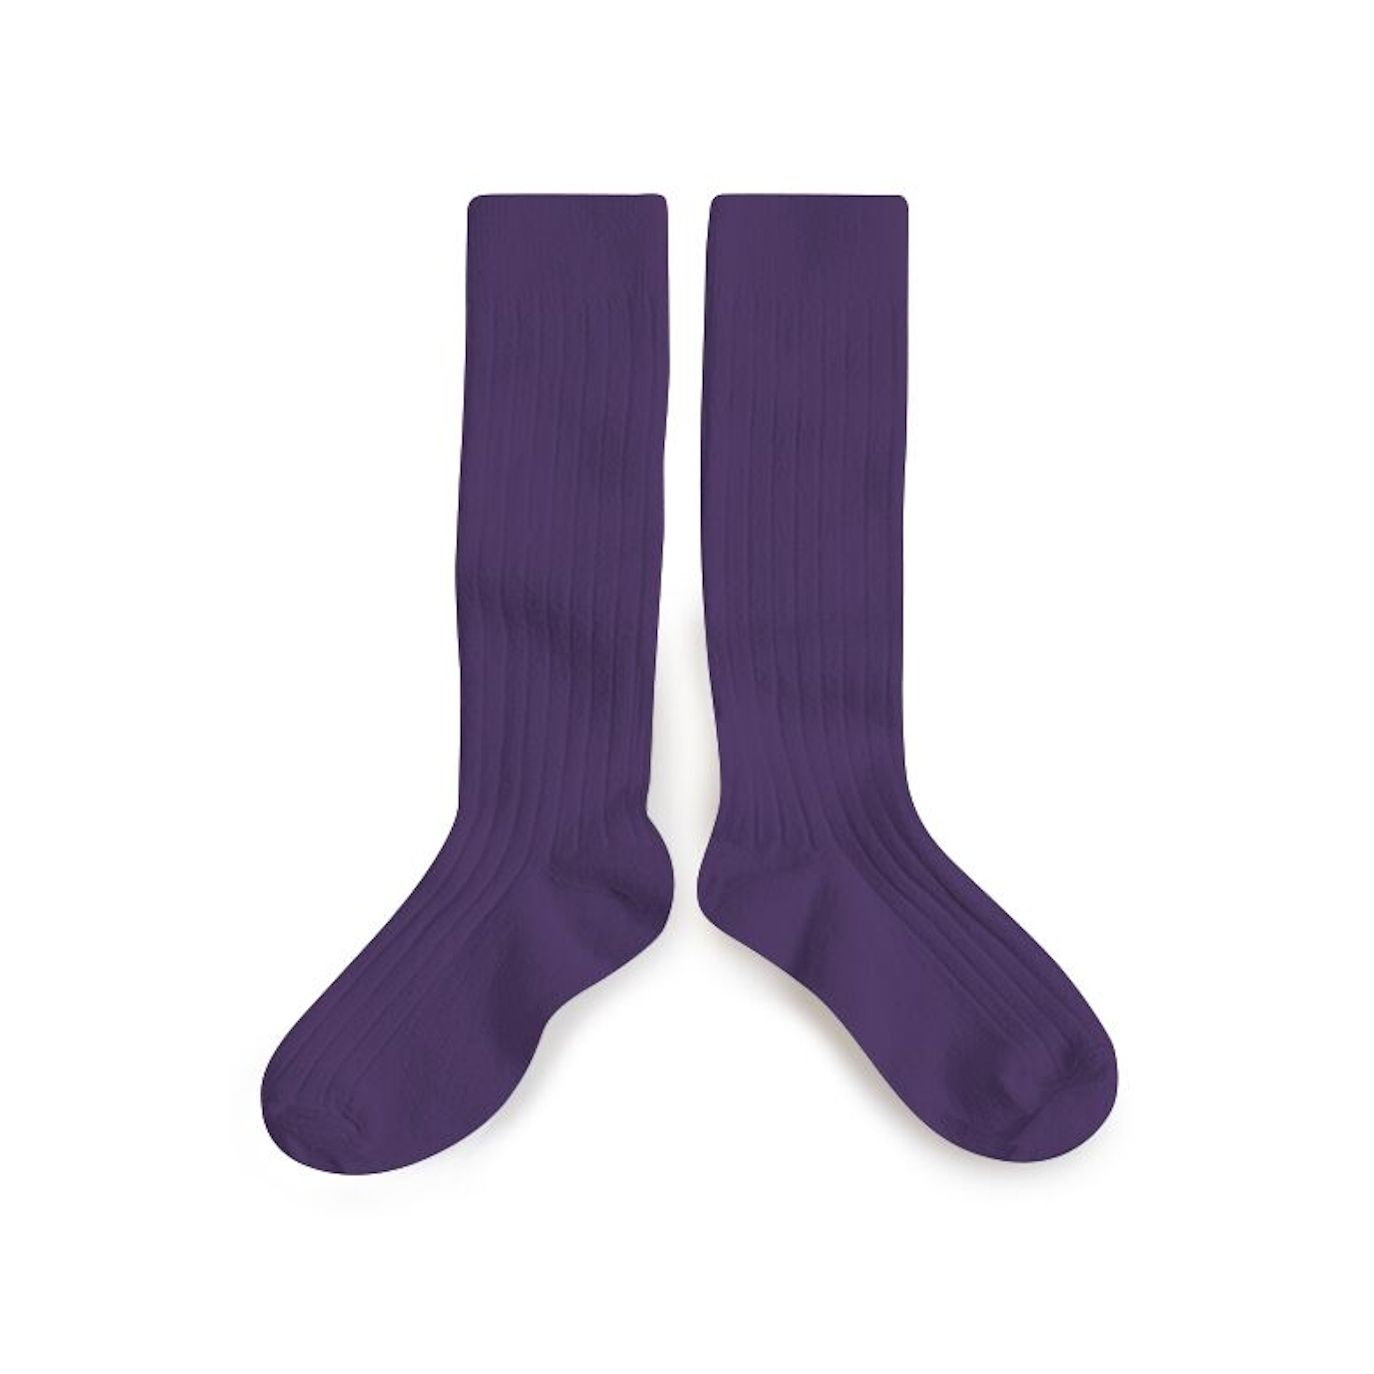 Collégien Knee high socks La Haute iris de provence 2950 771 La Haute 